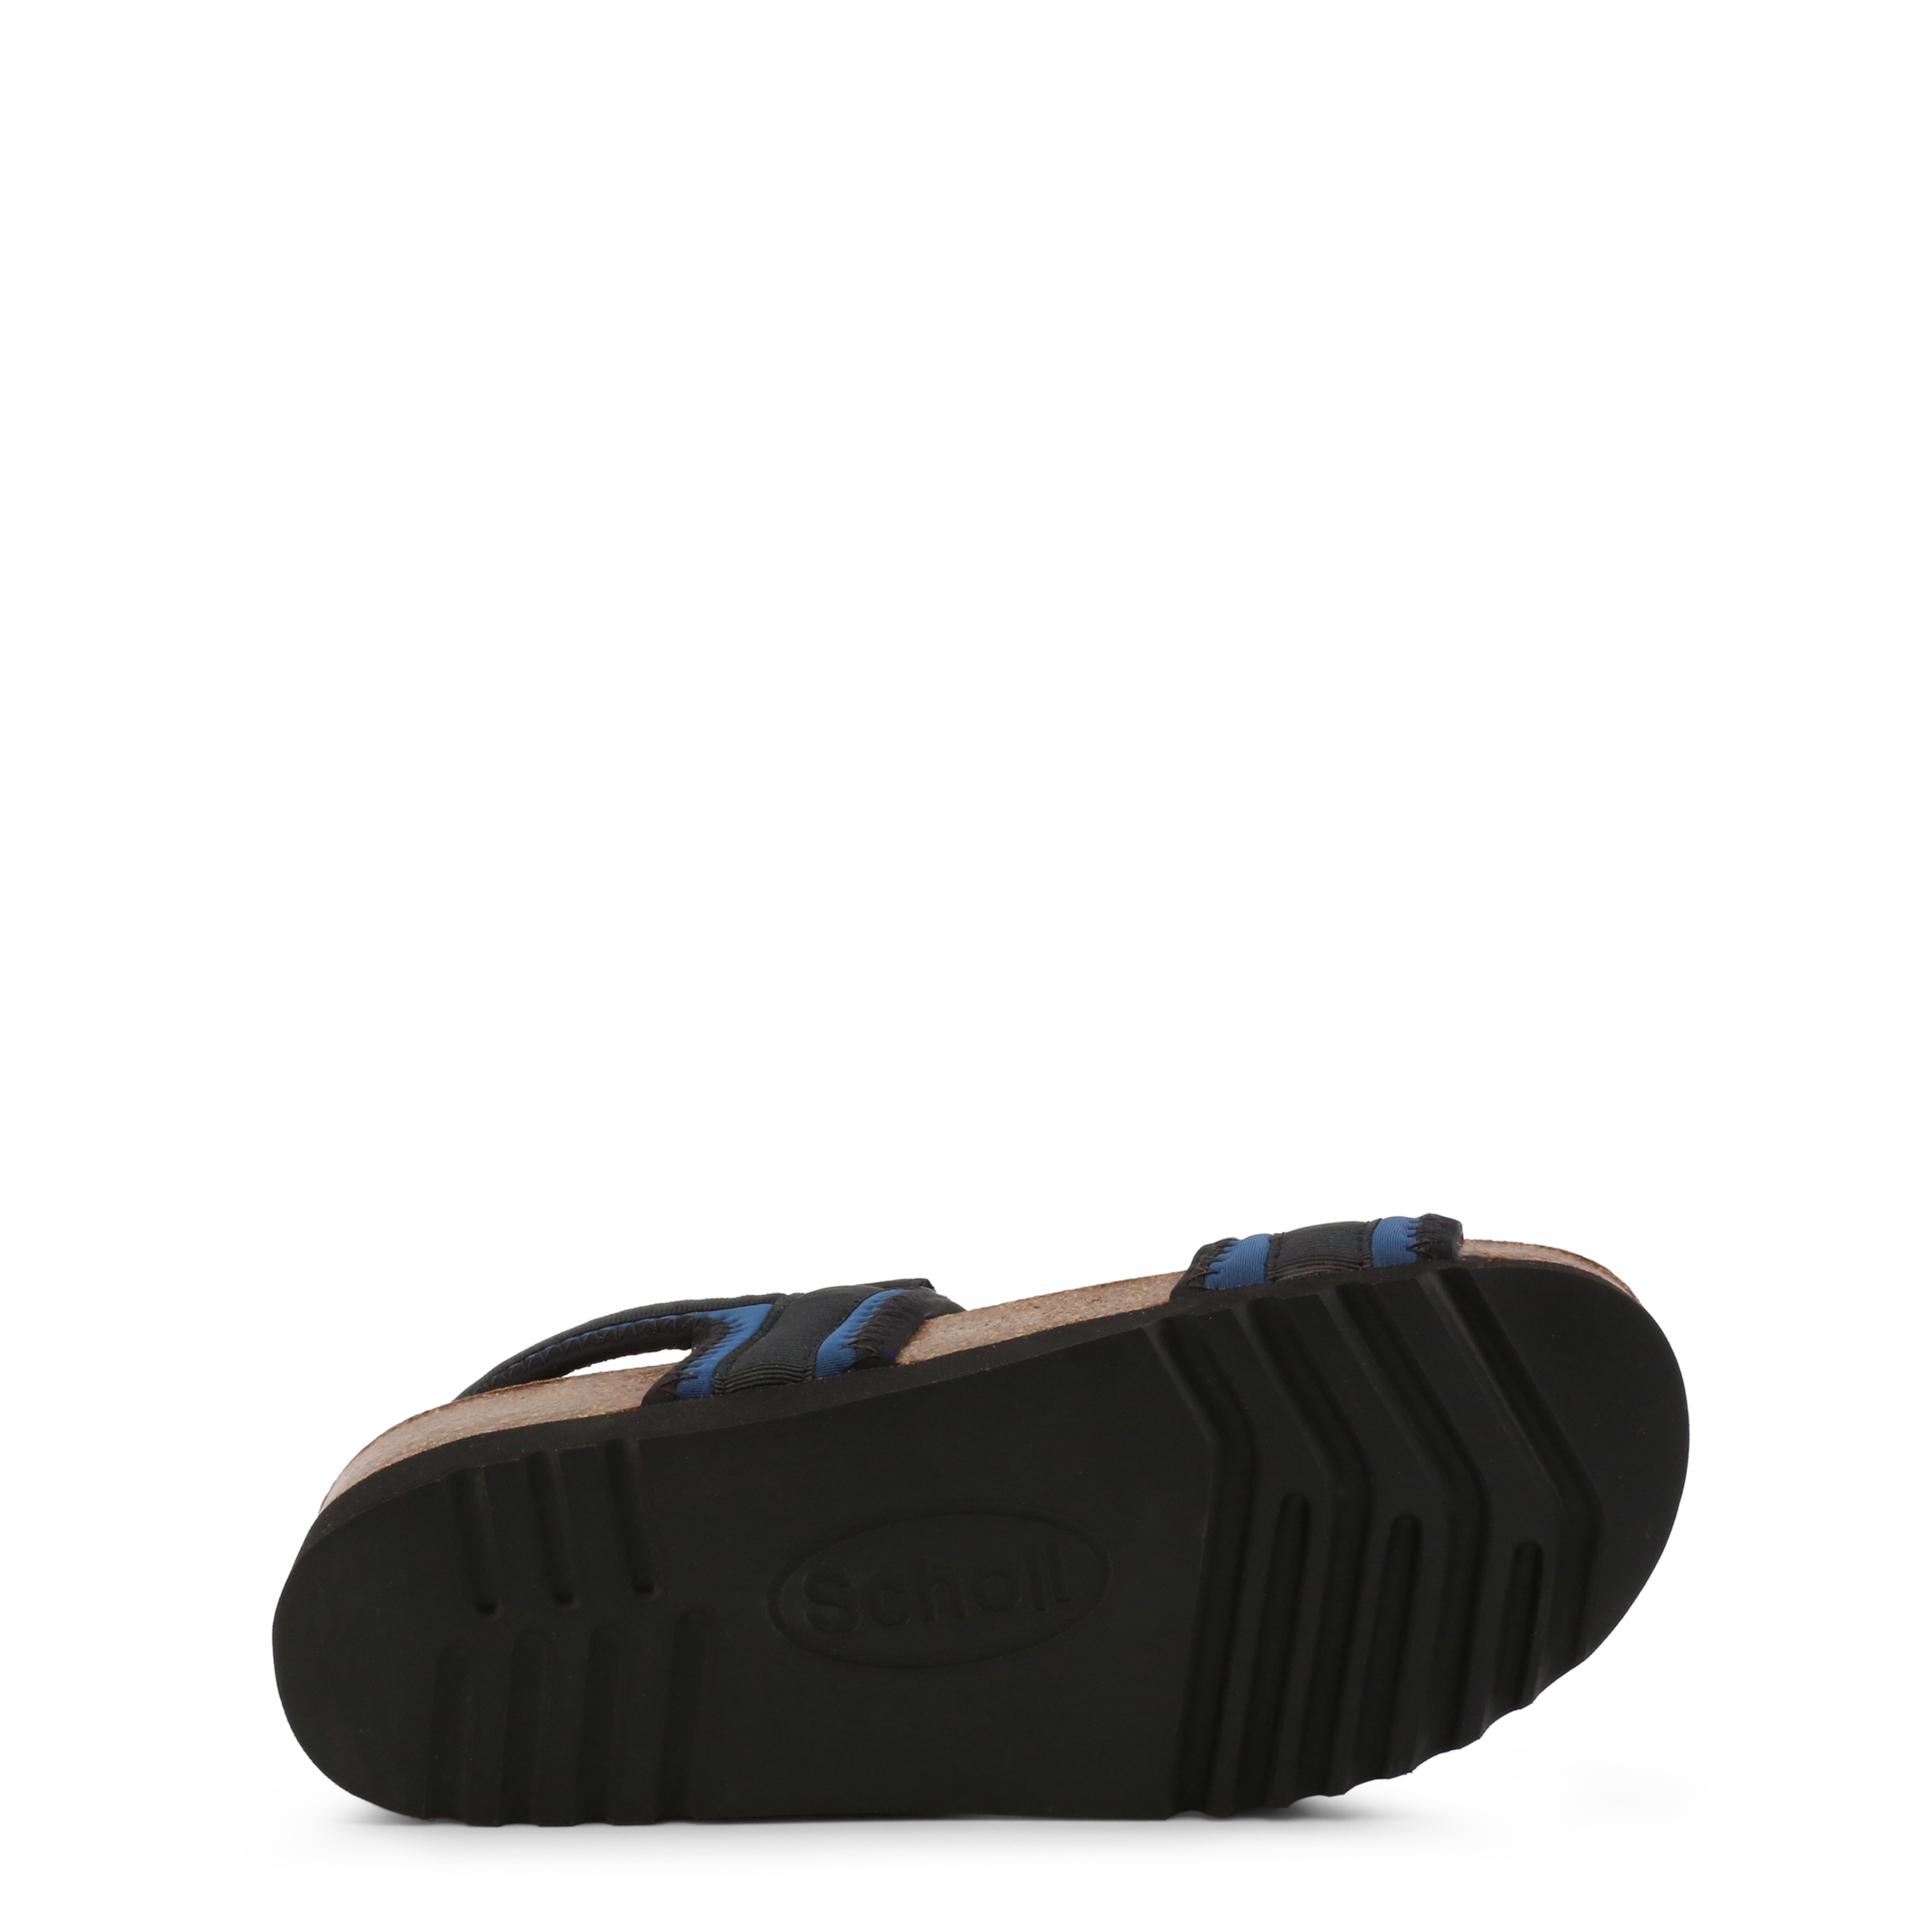 Dr Scholl Blue Sandals for Women - NAKI-F27752